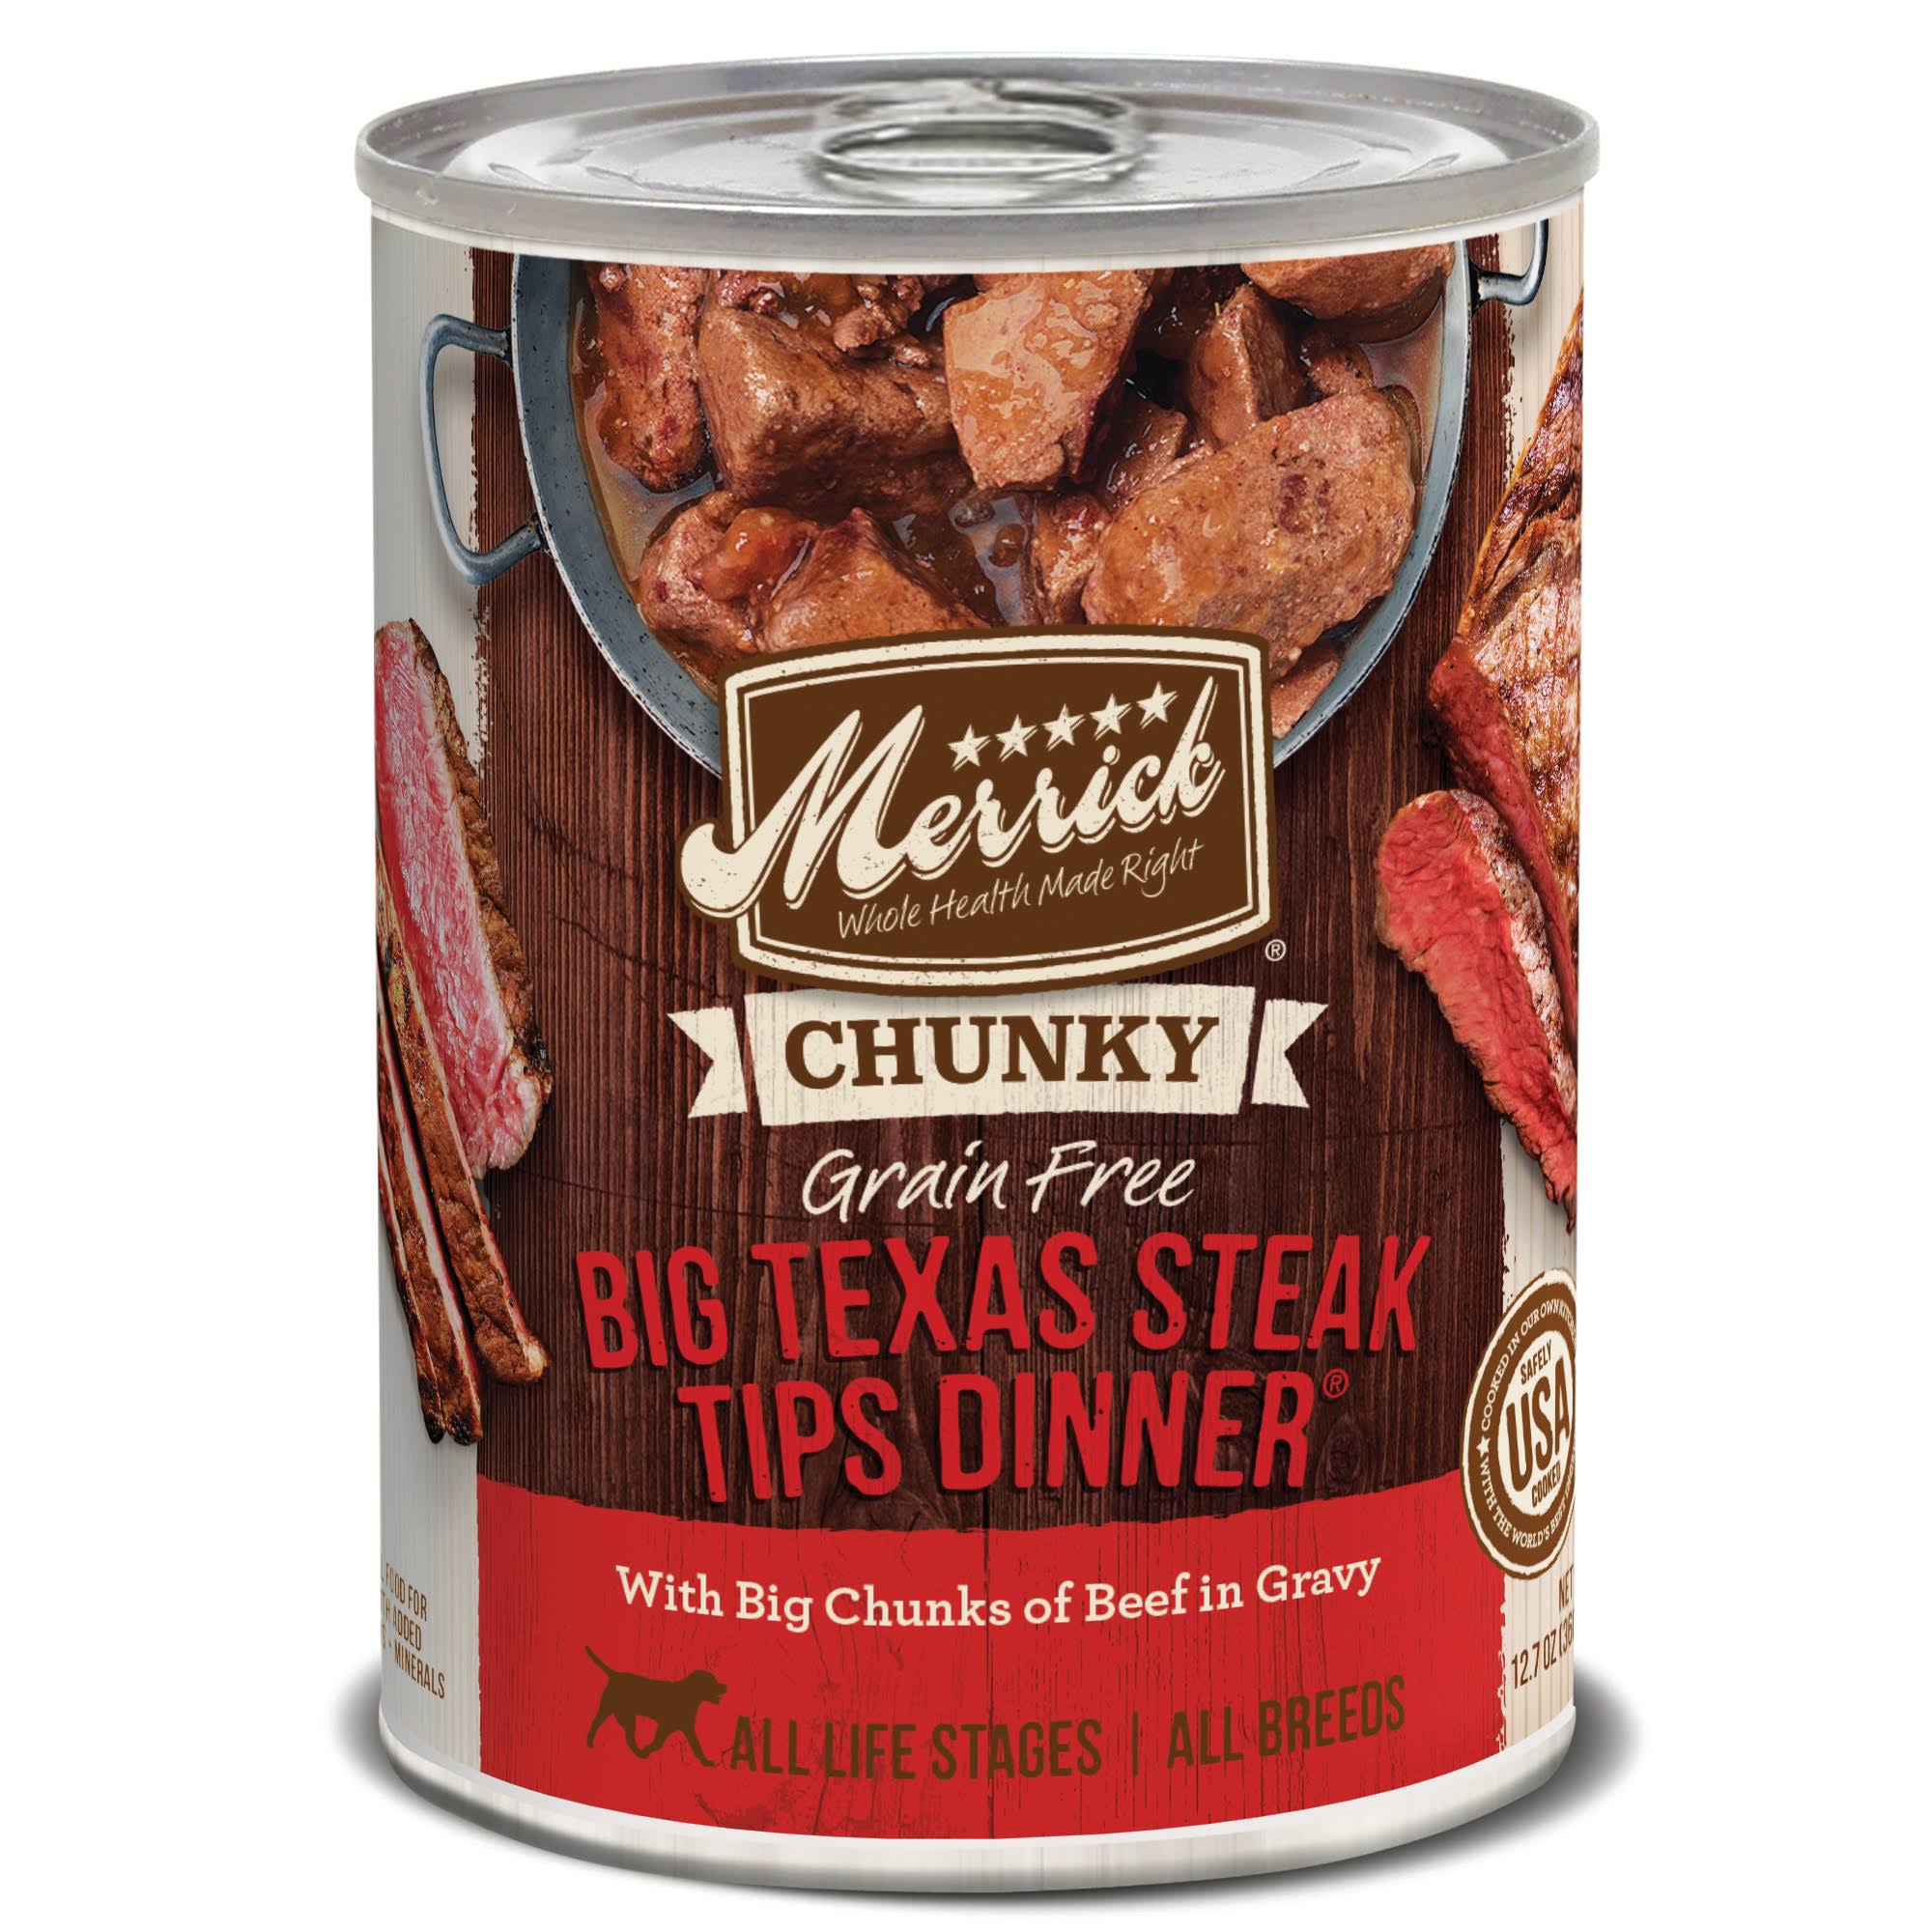 Merrick Chunky Big Texas Steak Tips Dinner Canned Dog Food - 12.7oz